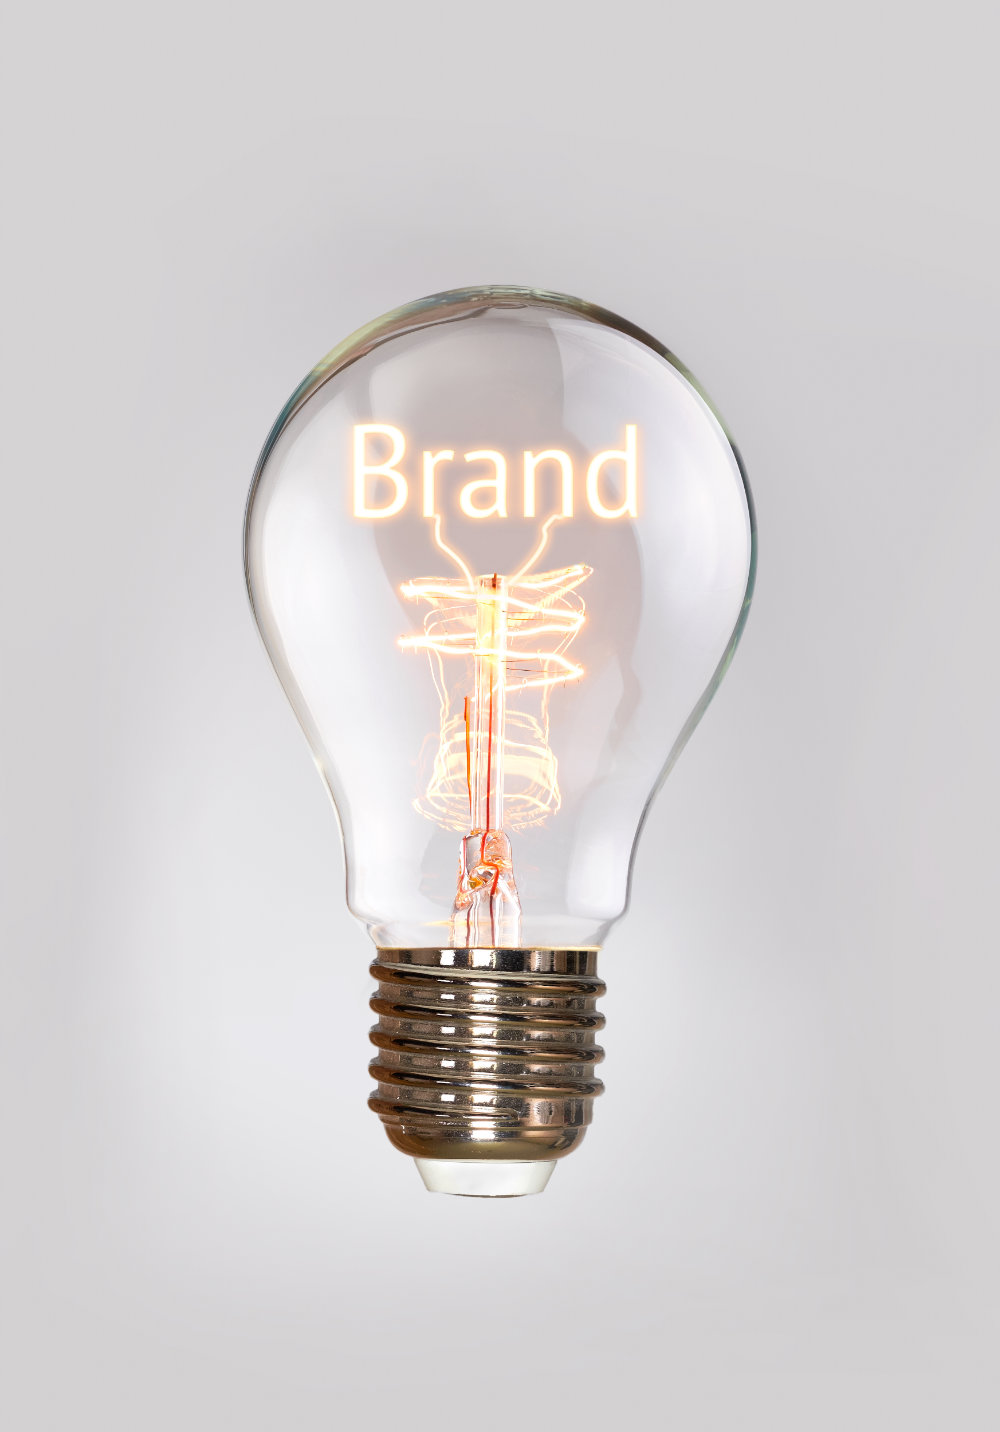   Brand Awareness    Brand Value    Brand Loyalty   your success formula 